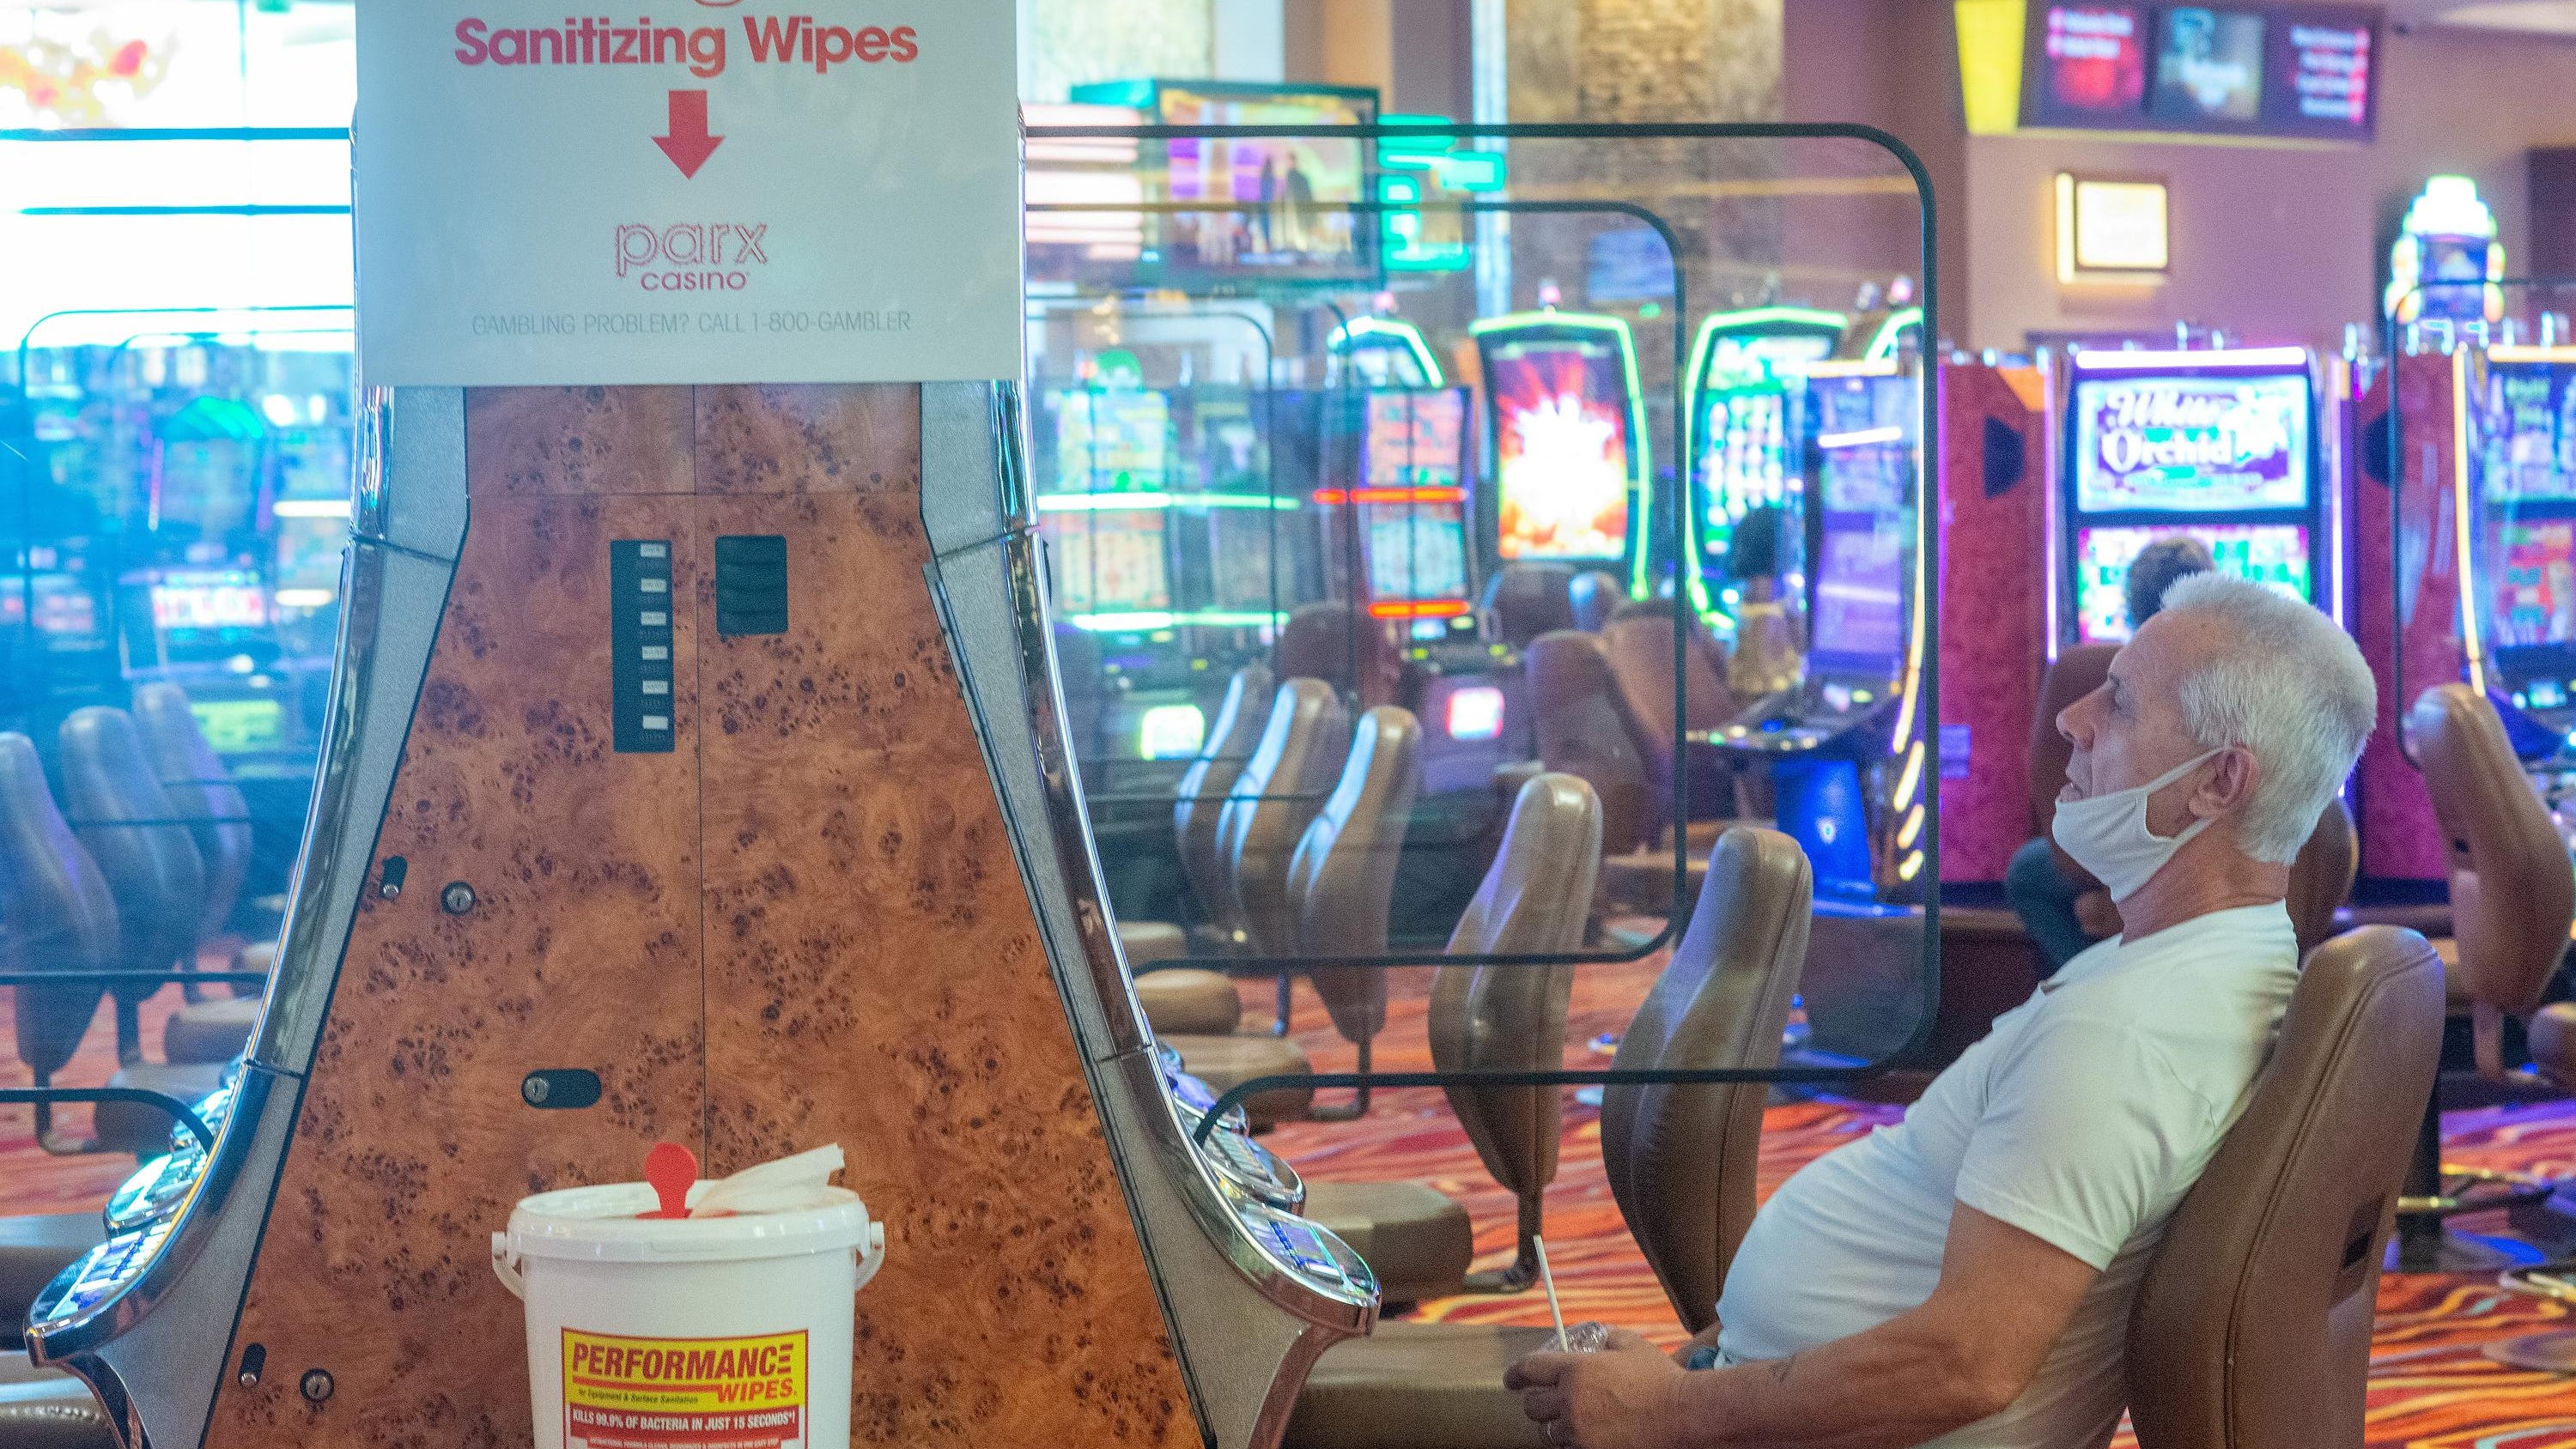 Pa Gambling Machines In Bars